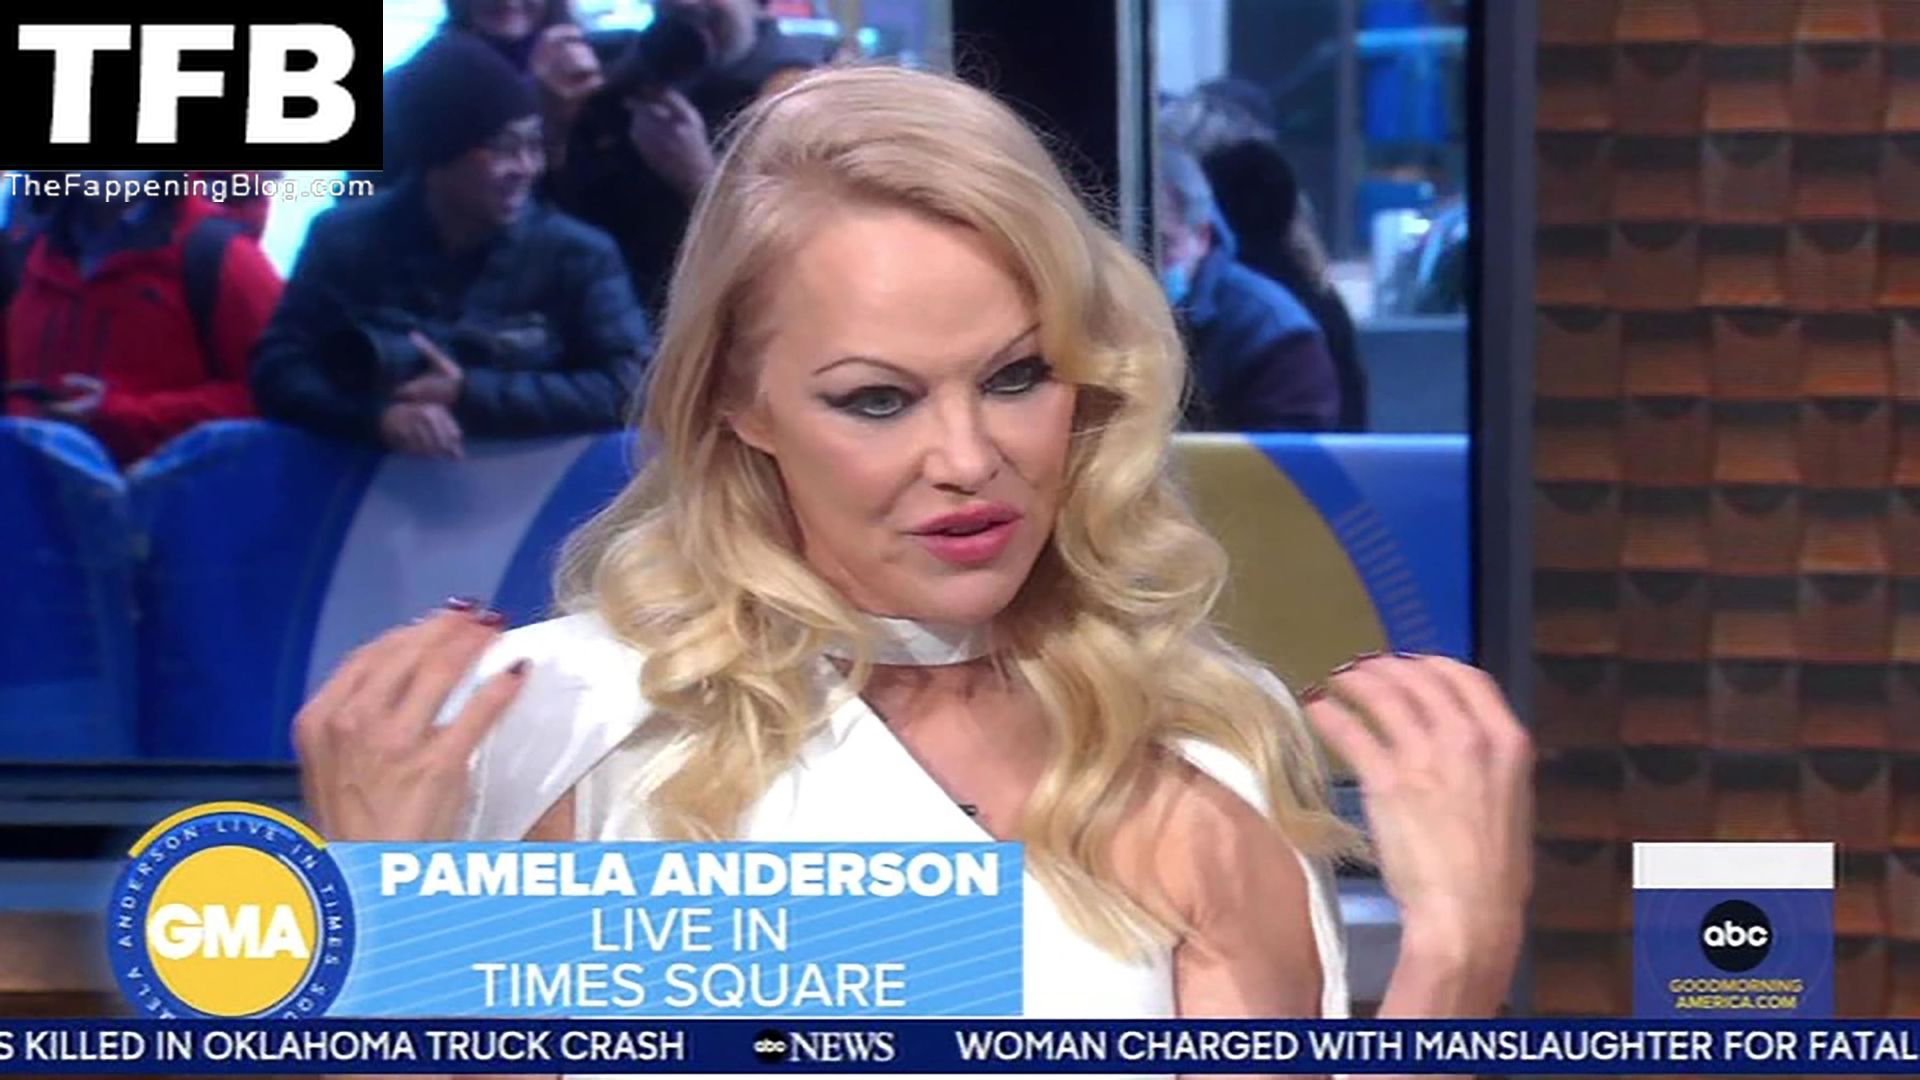 Pamela-Anderson-Hot-The-Fappening-Blog-11.jpg